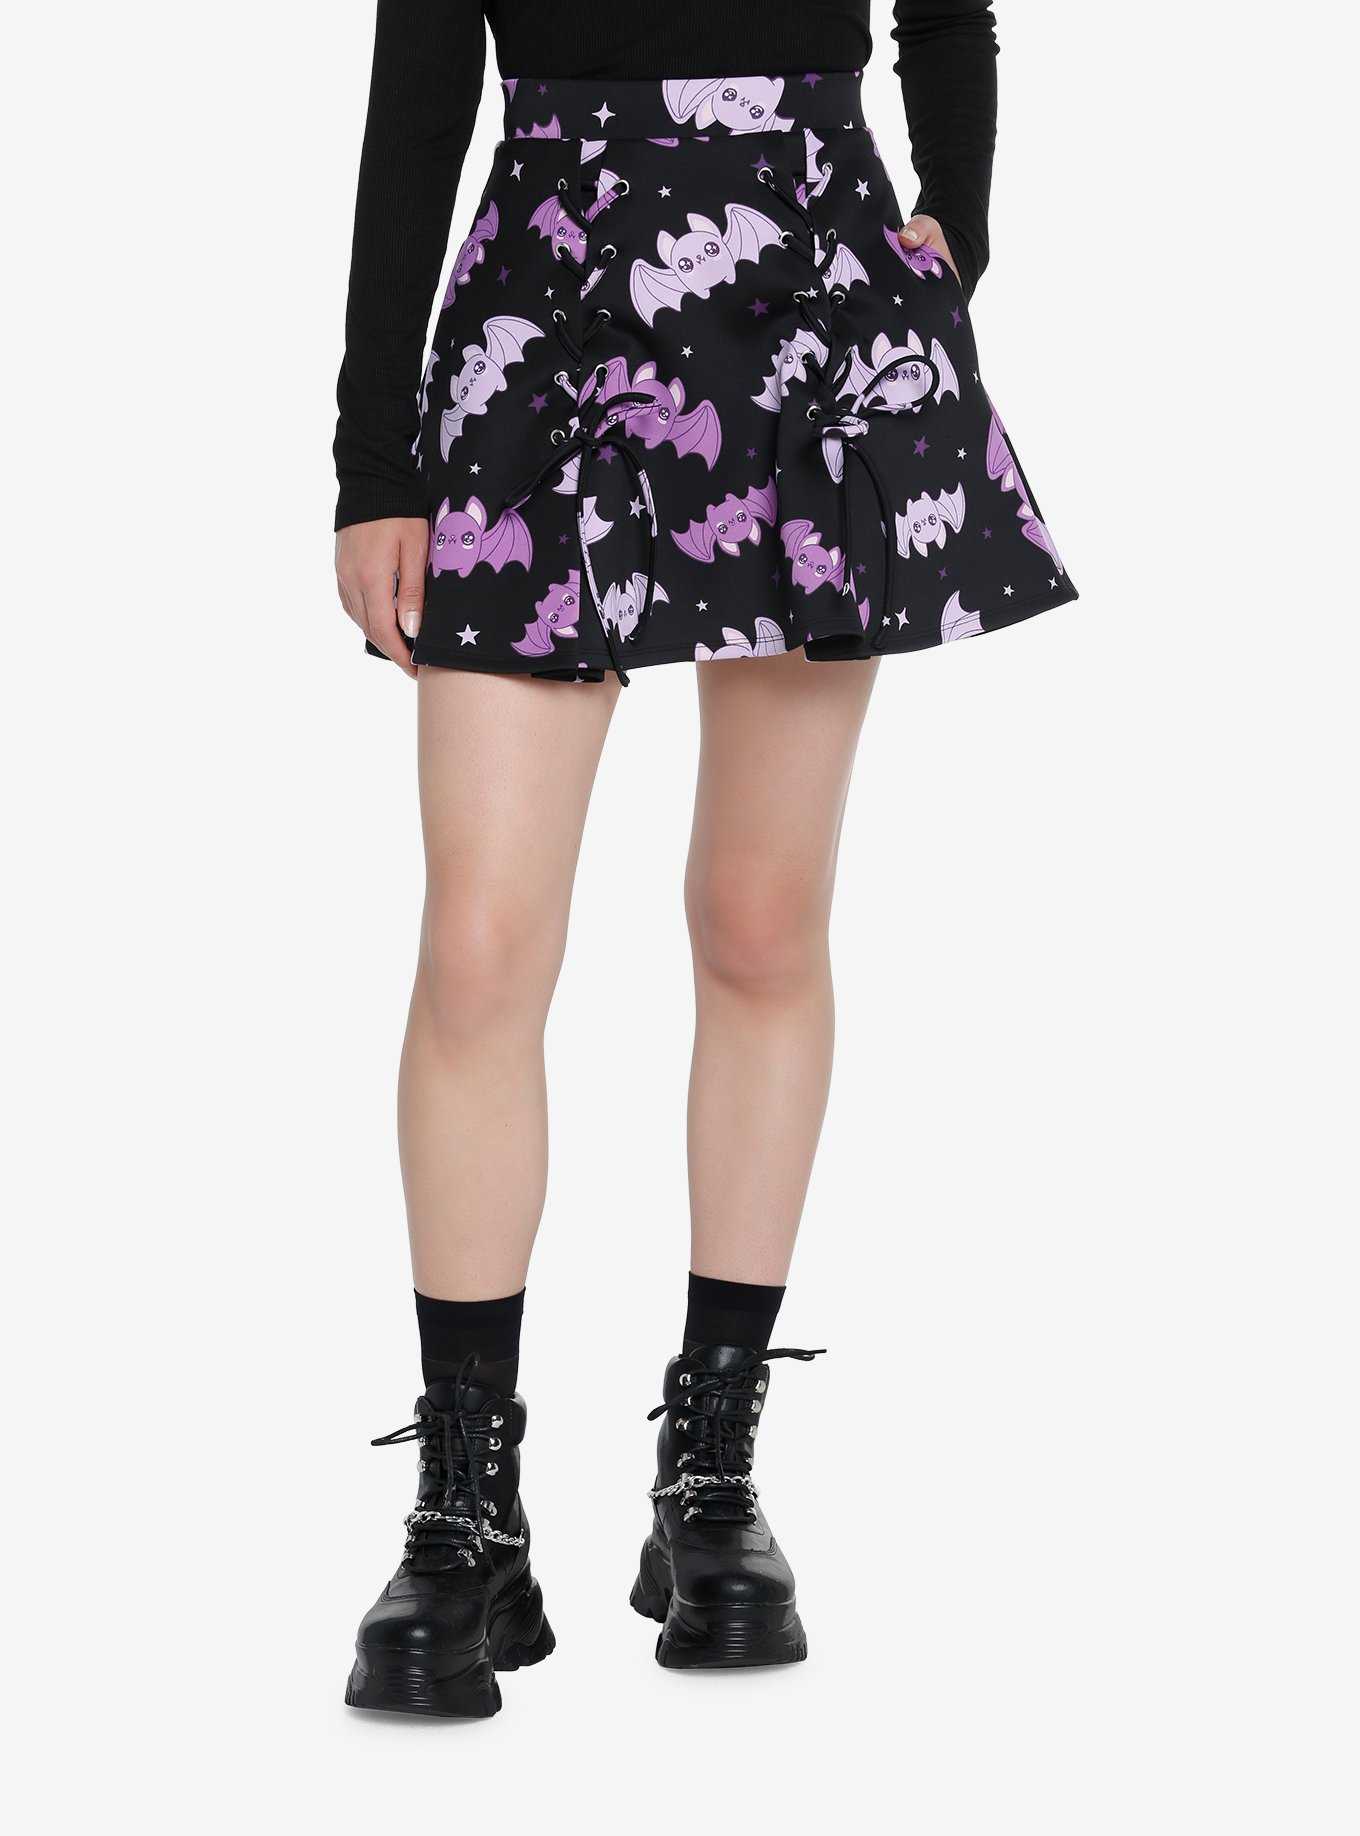 Sweet Society Purple Kawaii Bat Scuba Skater Skirt, , hi-res